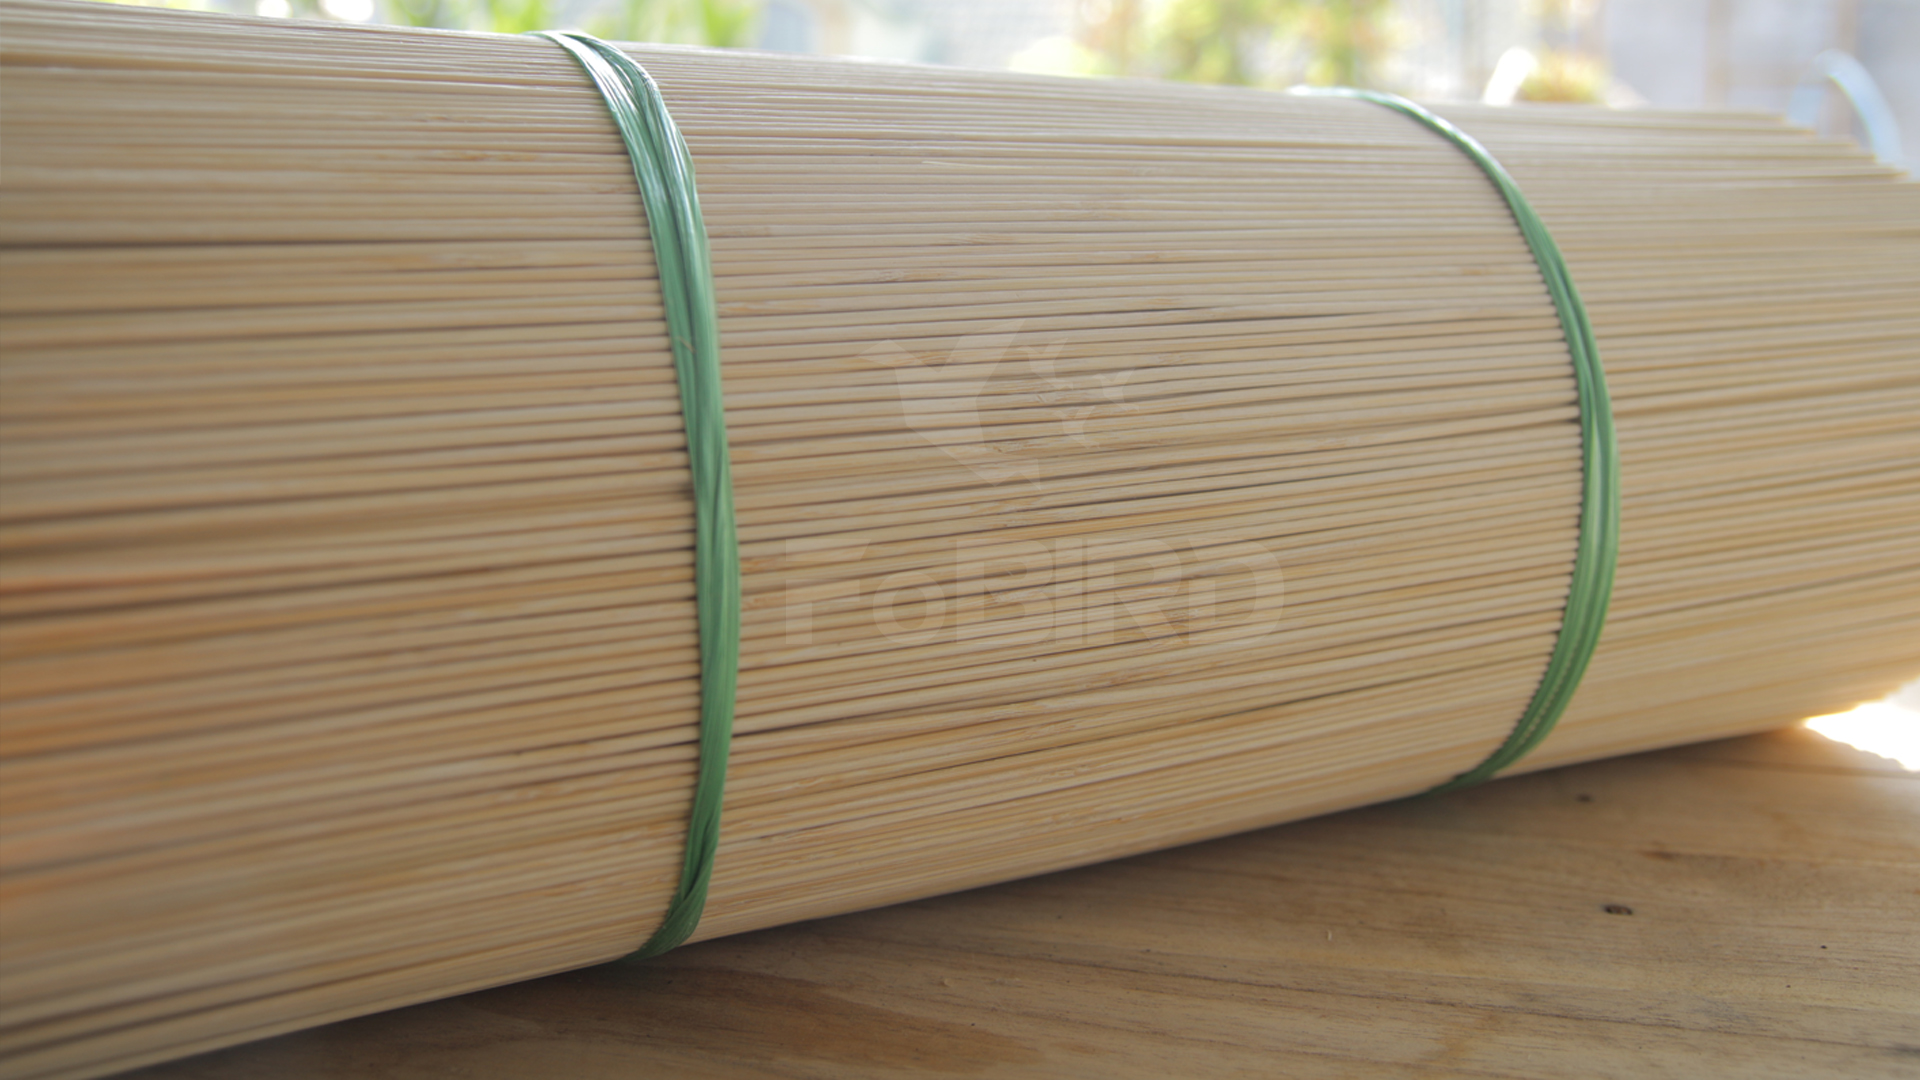 Bamboo sticks to make models